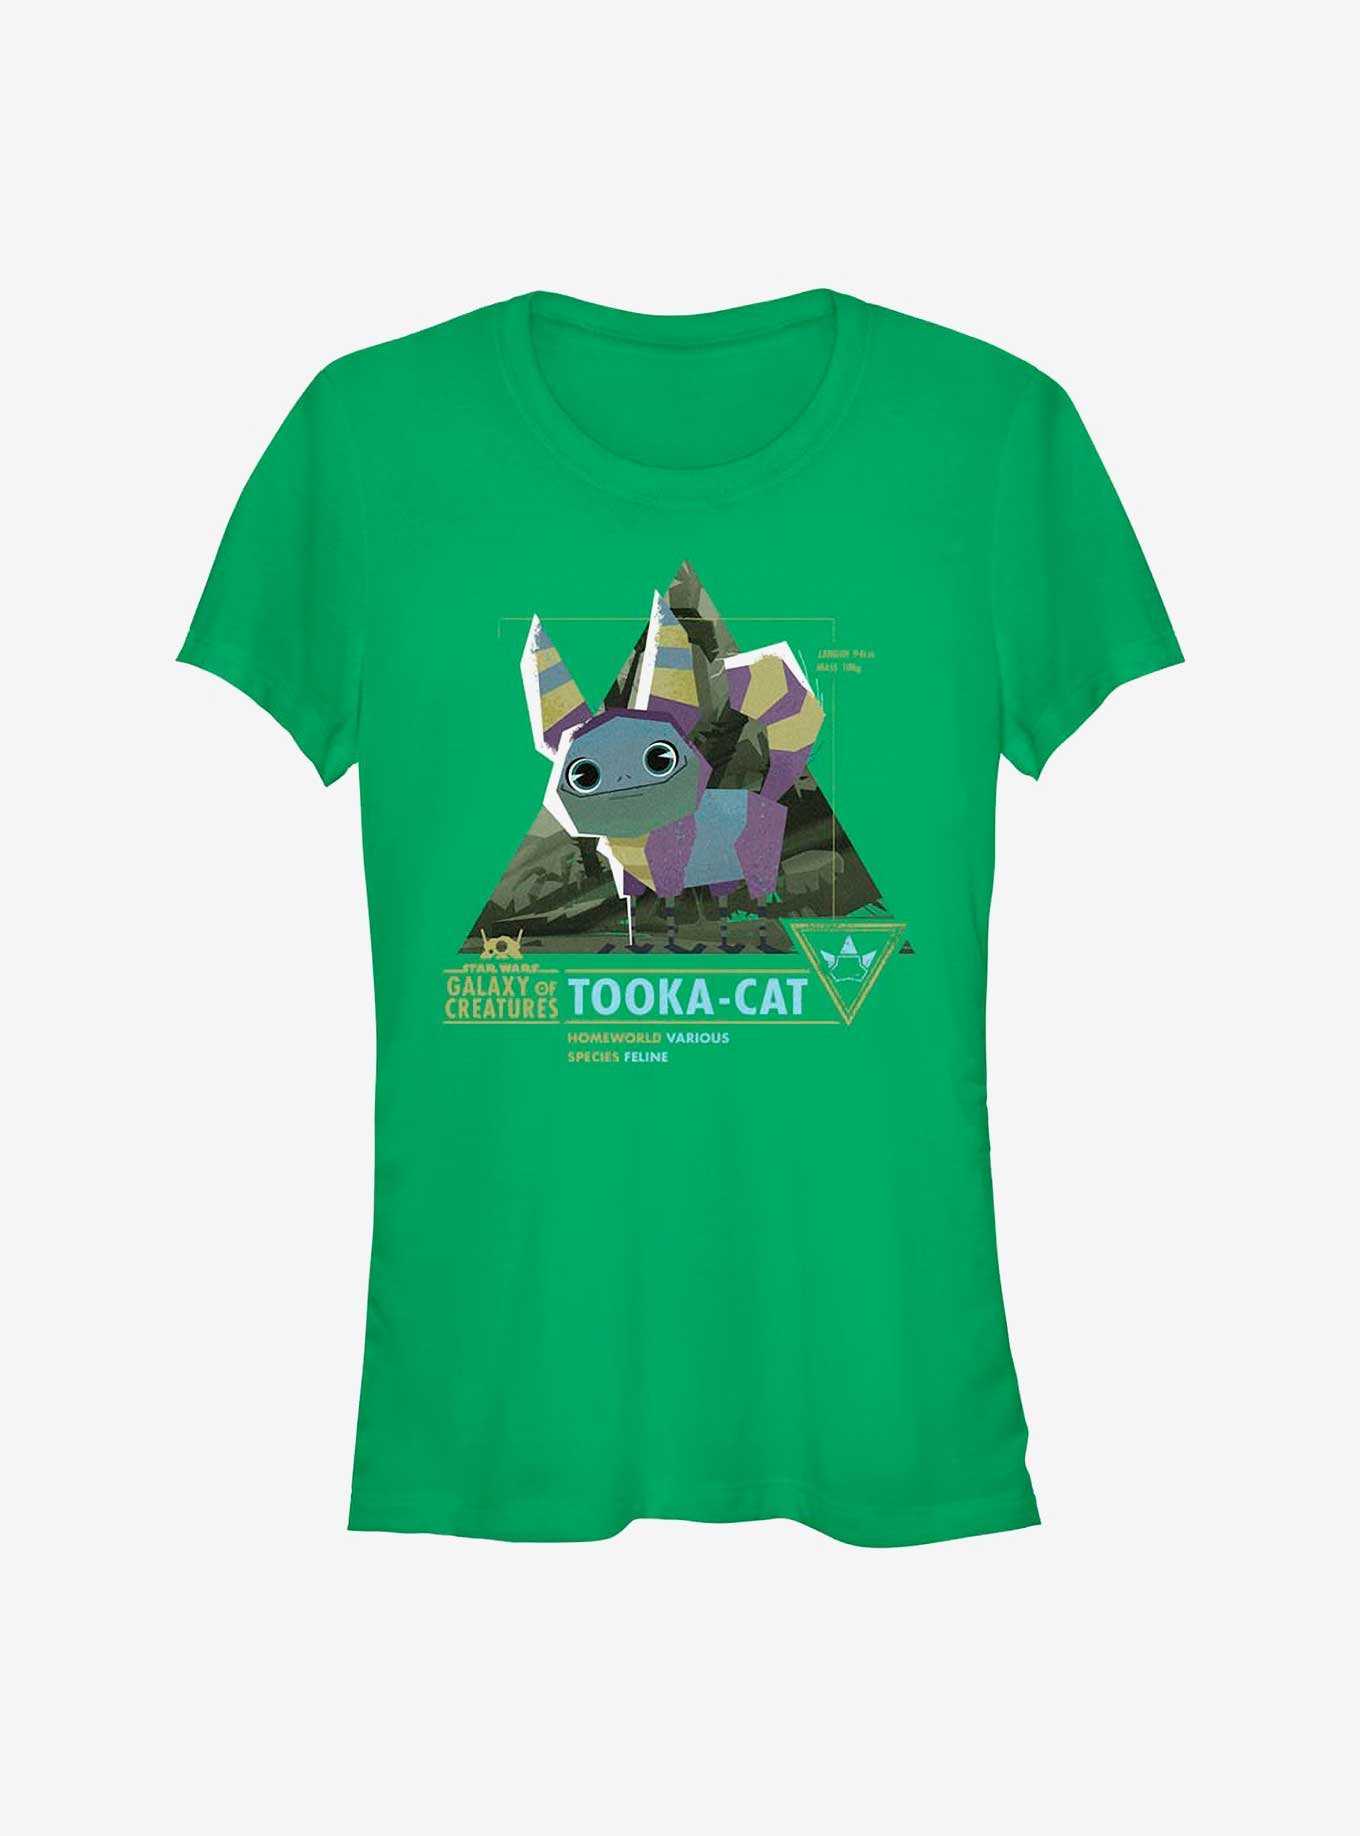 Star Wars: Galaxy Of Creatures Tooka-Cat Species Girls T-Shirt, , hi-res